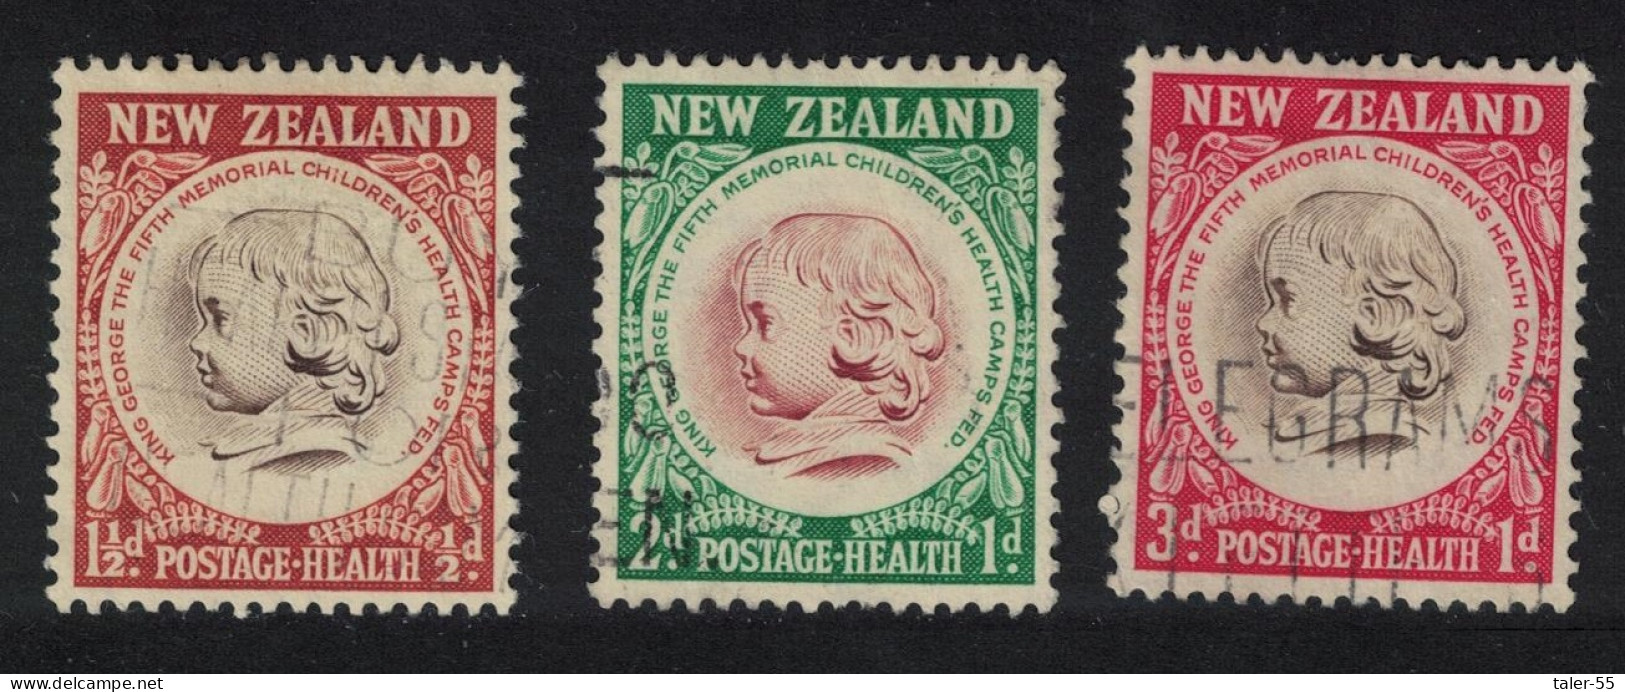 New Zealand Health Camps Federation Emblem 3v 1955 Canc SG#742-744 - Usati